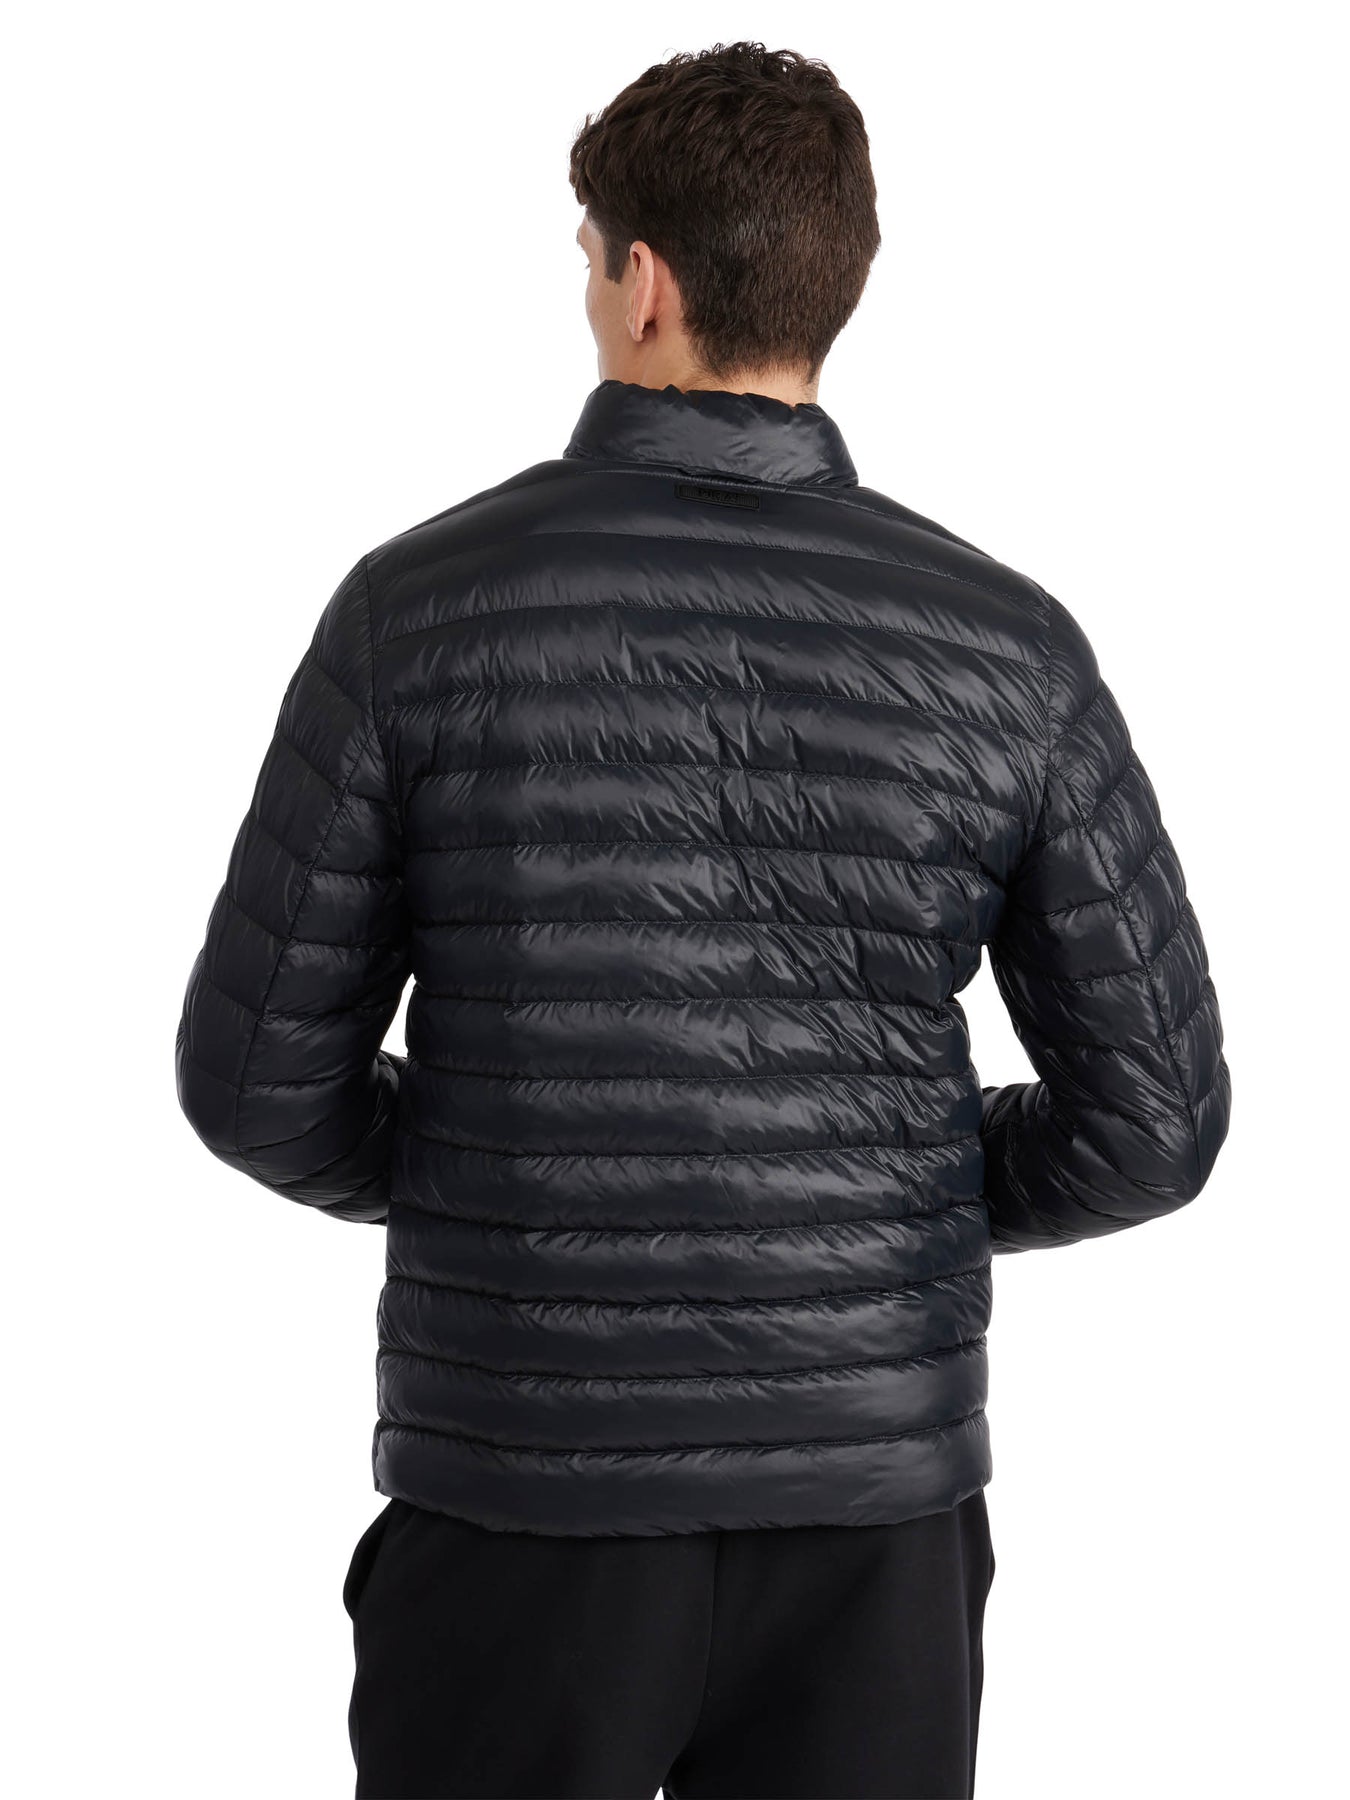 Buy Men Black Solid Casual Jacket Online - 658916